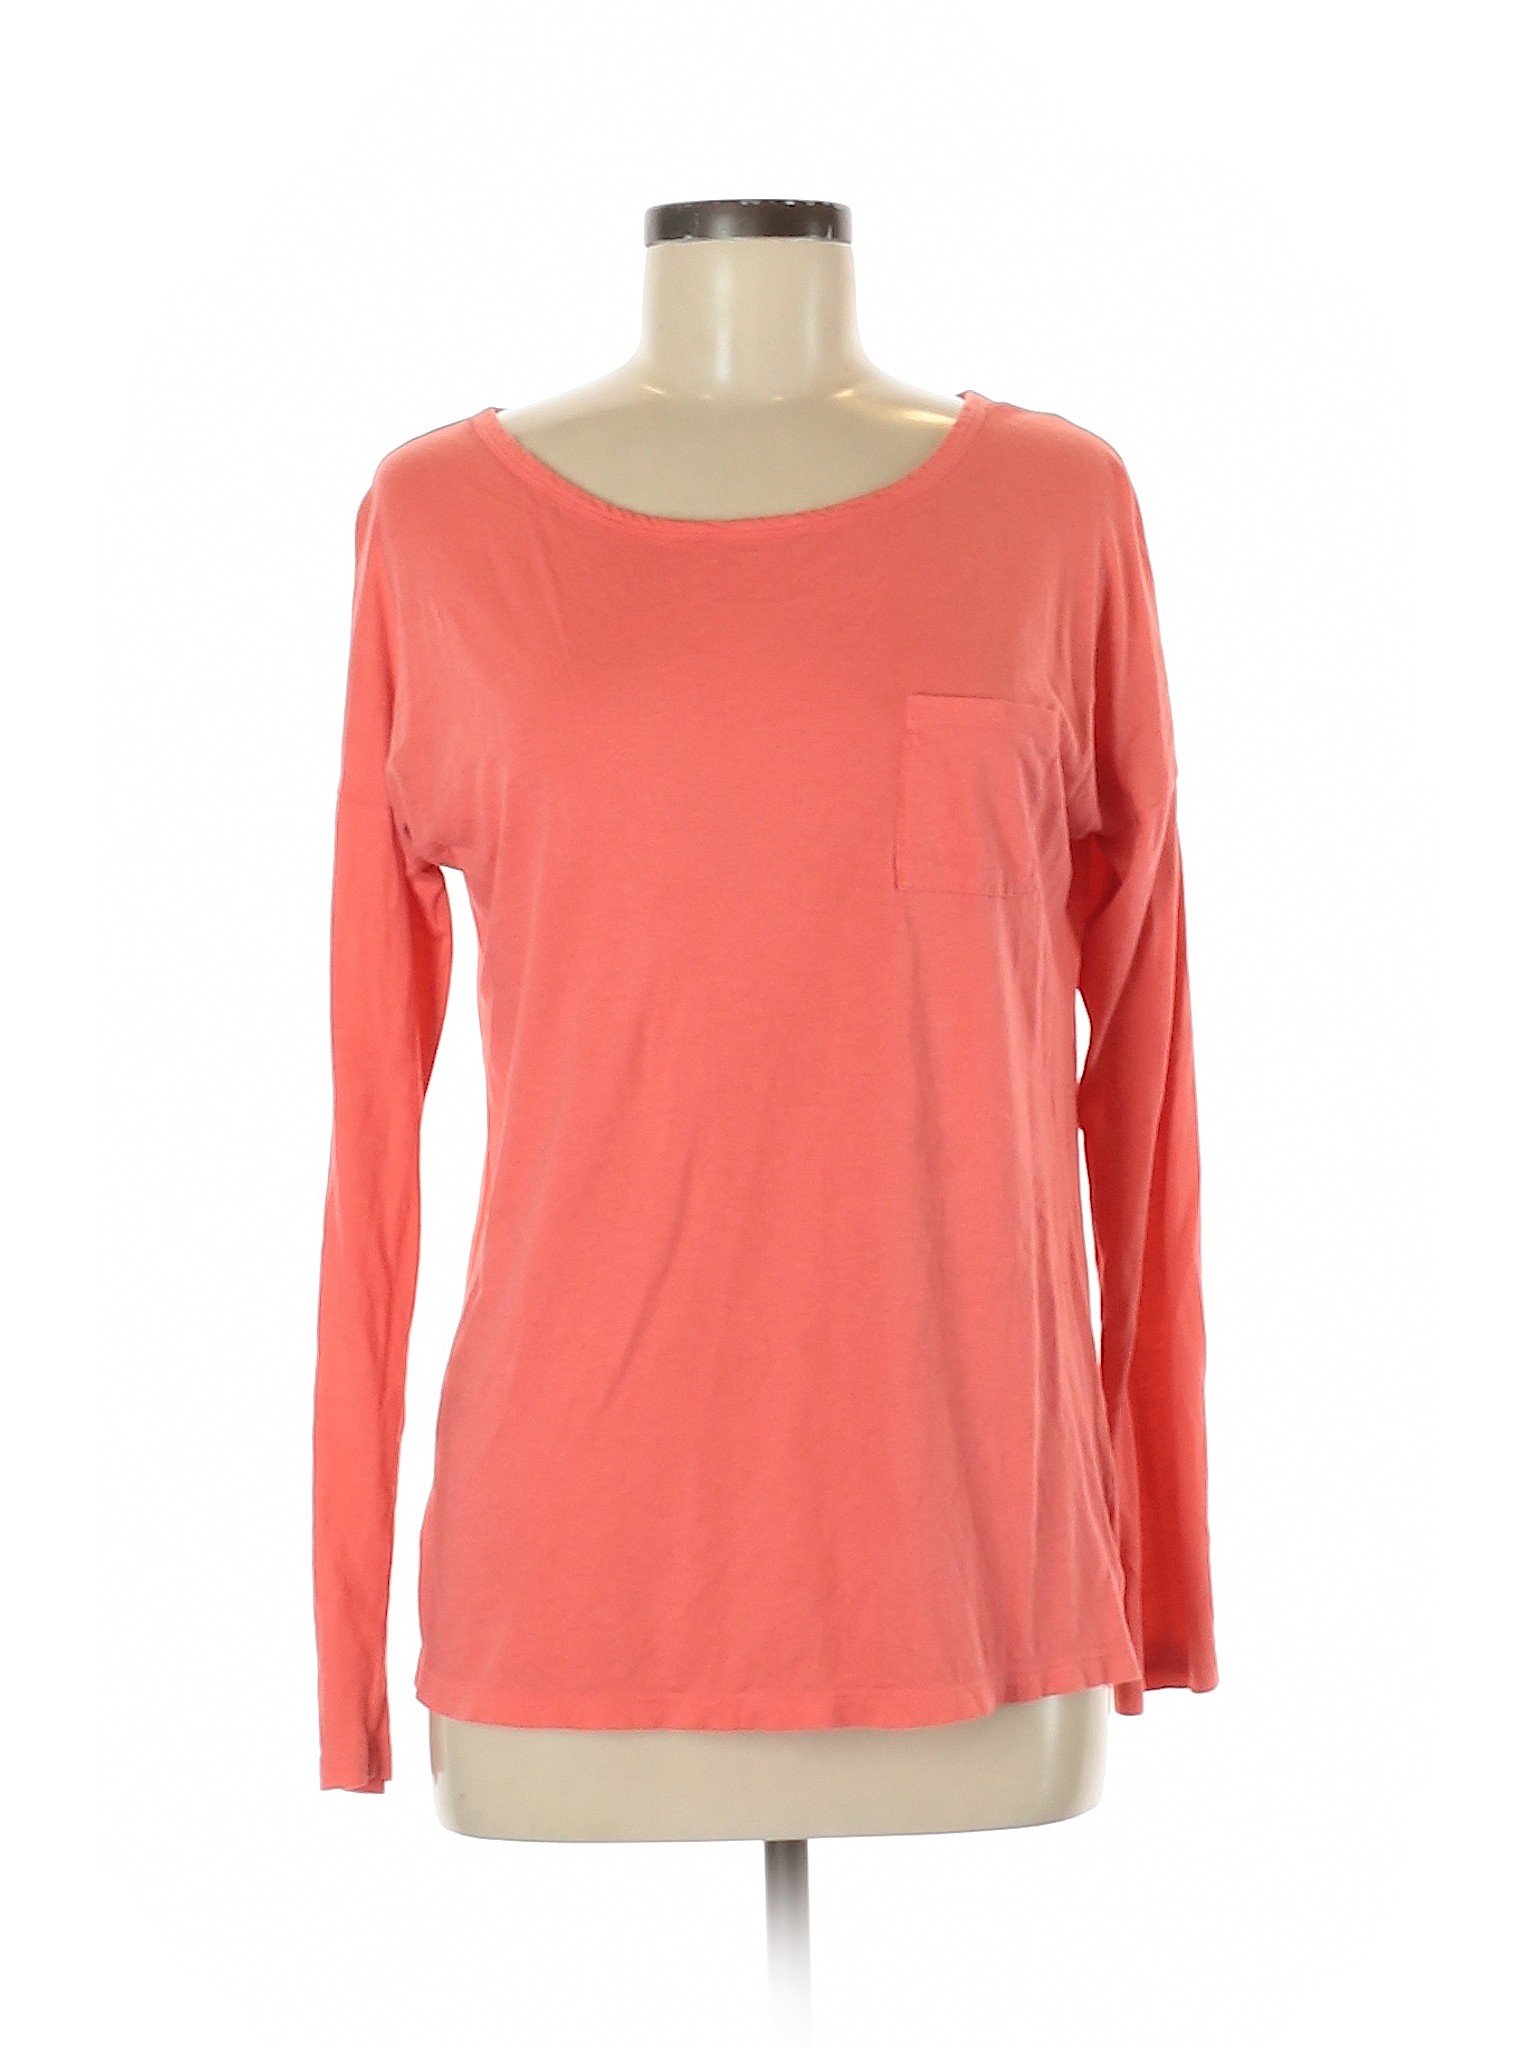 Old Navy Women Pink Long Sleeve T-Shirt M | eBay